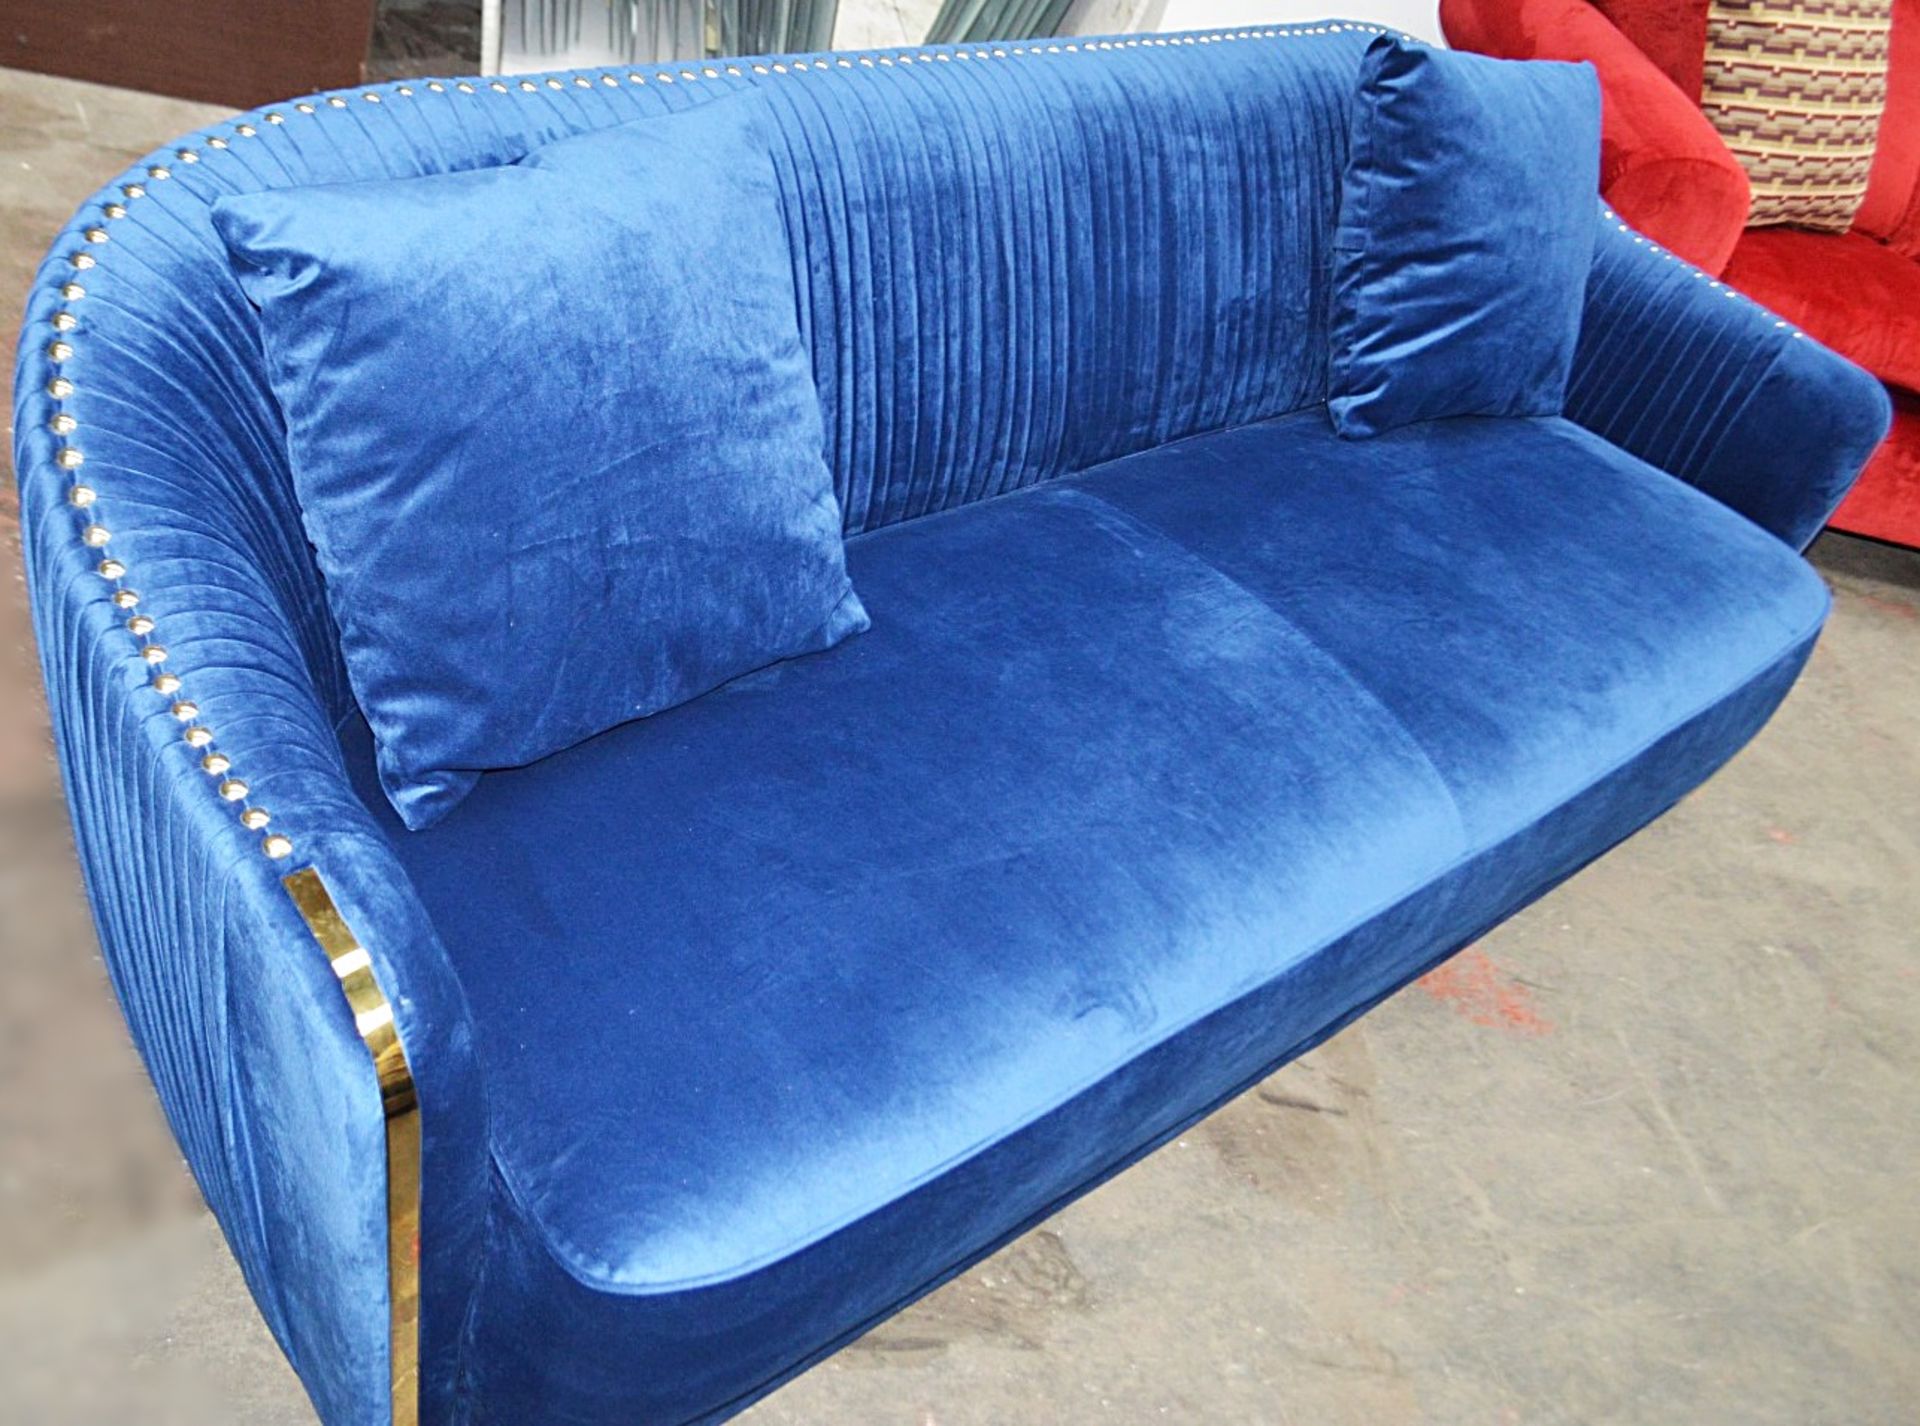 1 x Bespoke Blue Velvet Button-Back Sofa In A Rich Royal Blue Velvet With Detailing In Gold - Image 4 of 8